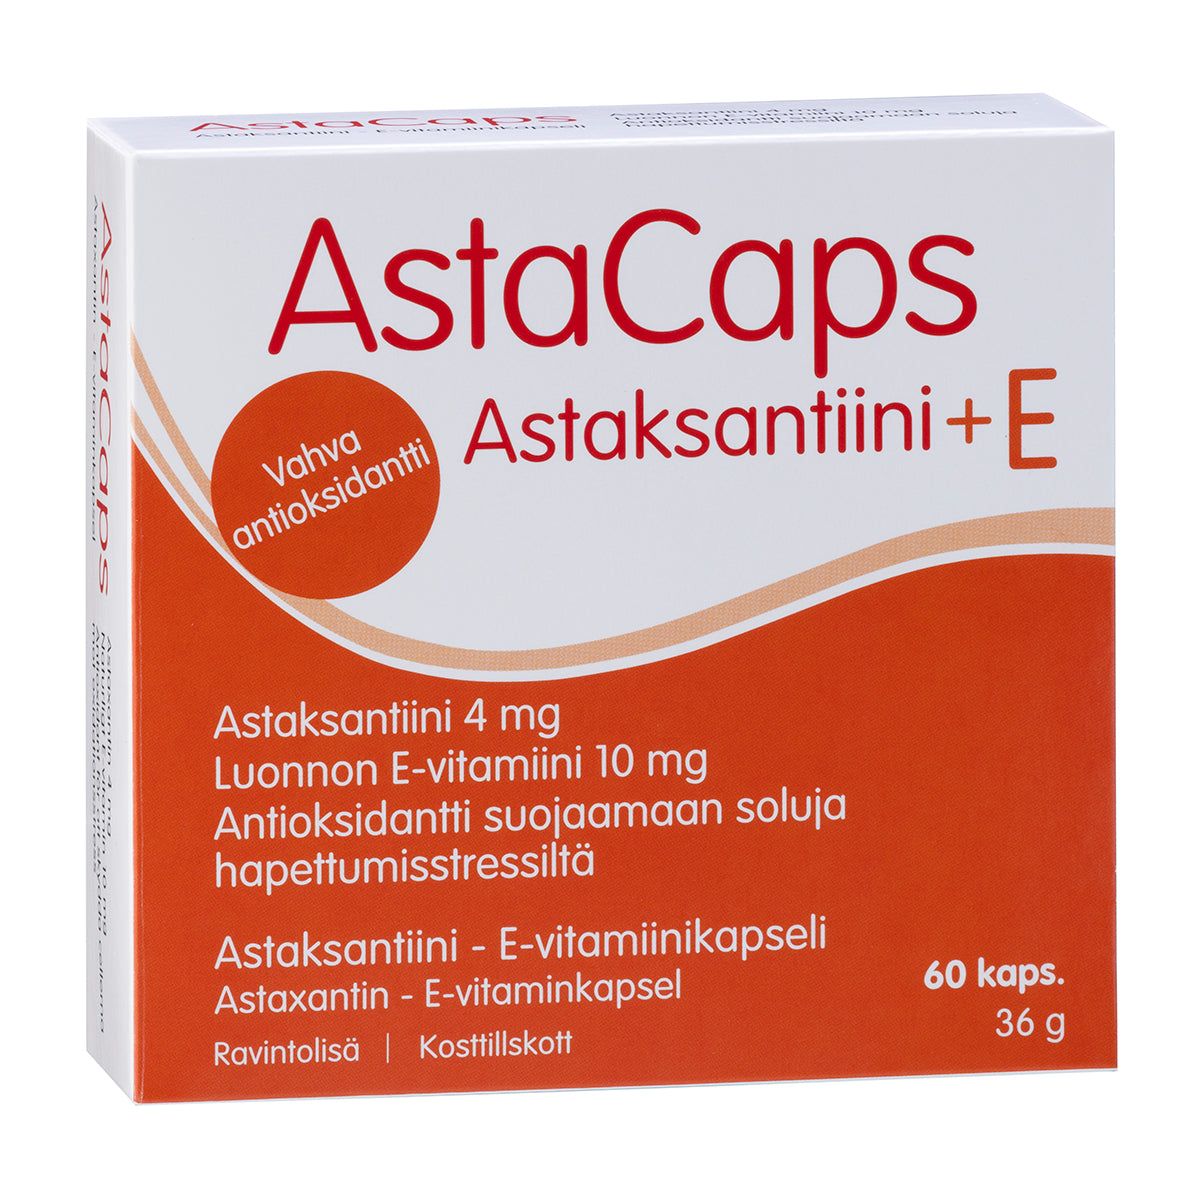 AstaCaps Astaksantiini + E-vitamiini 60 kaps.